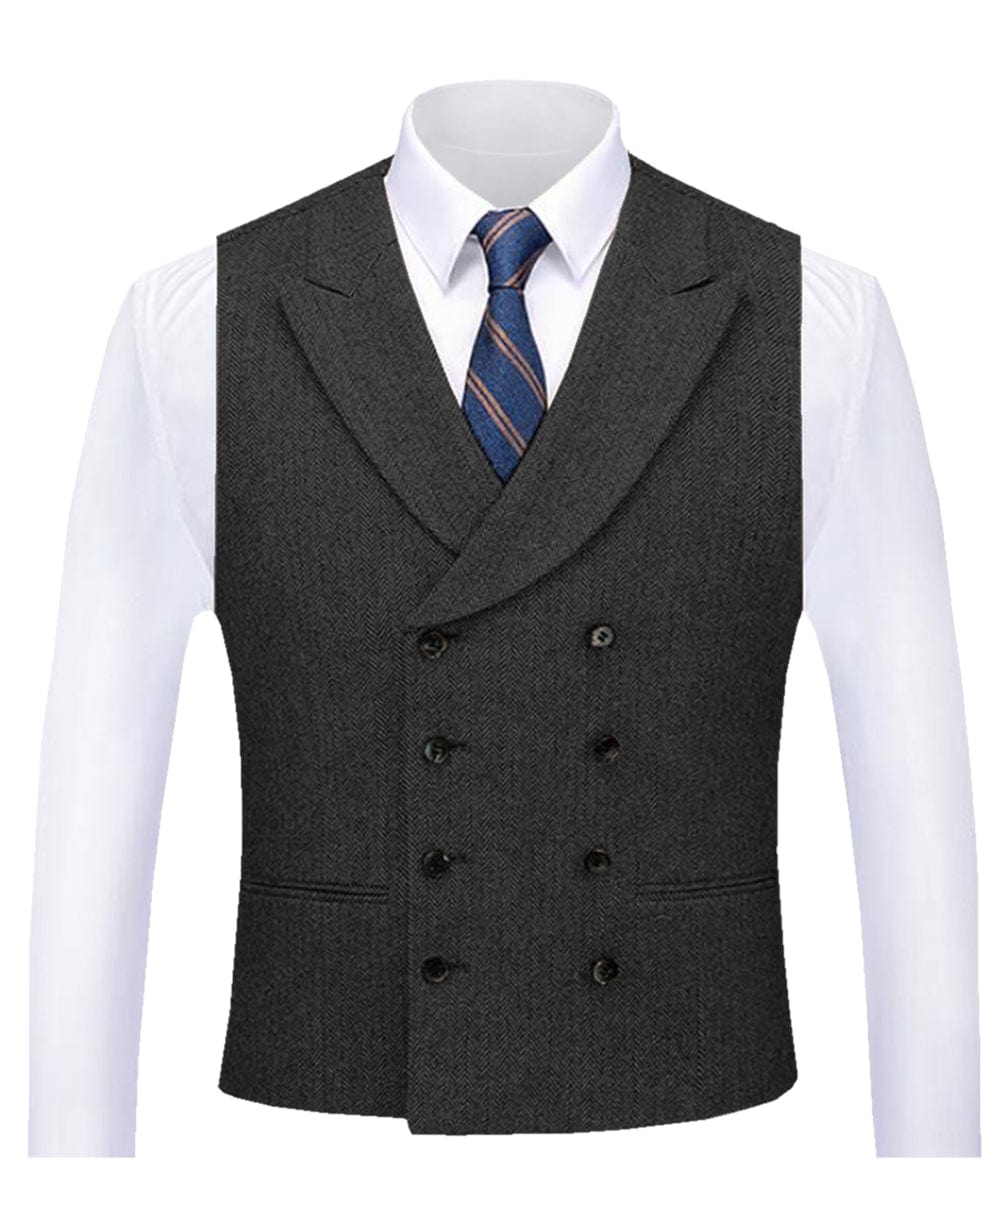 aesido Business Double Breasted Peak Lapel Vest For Men